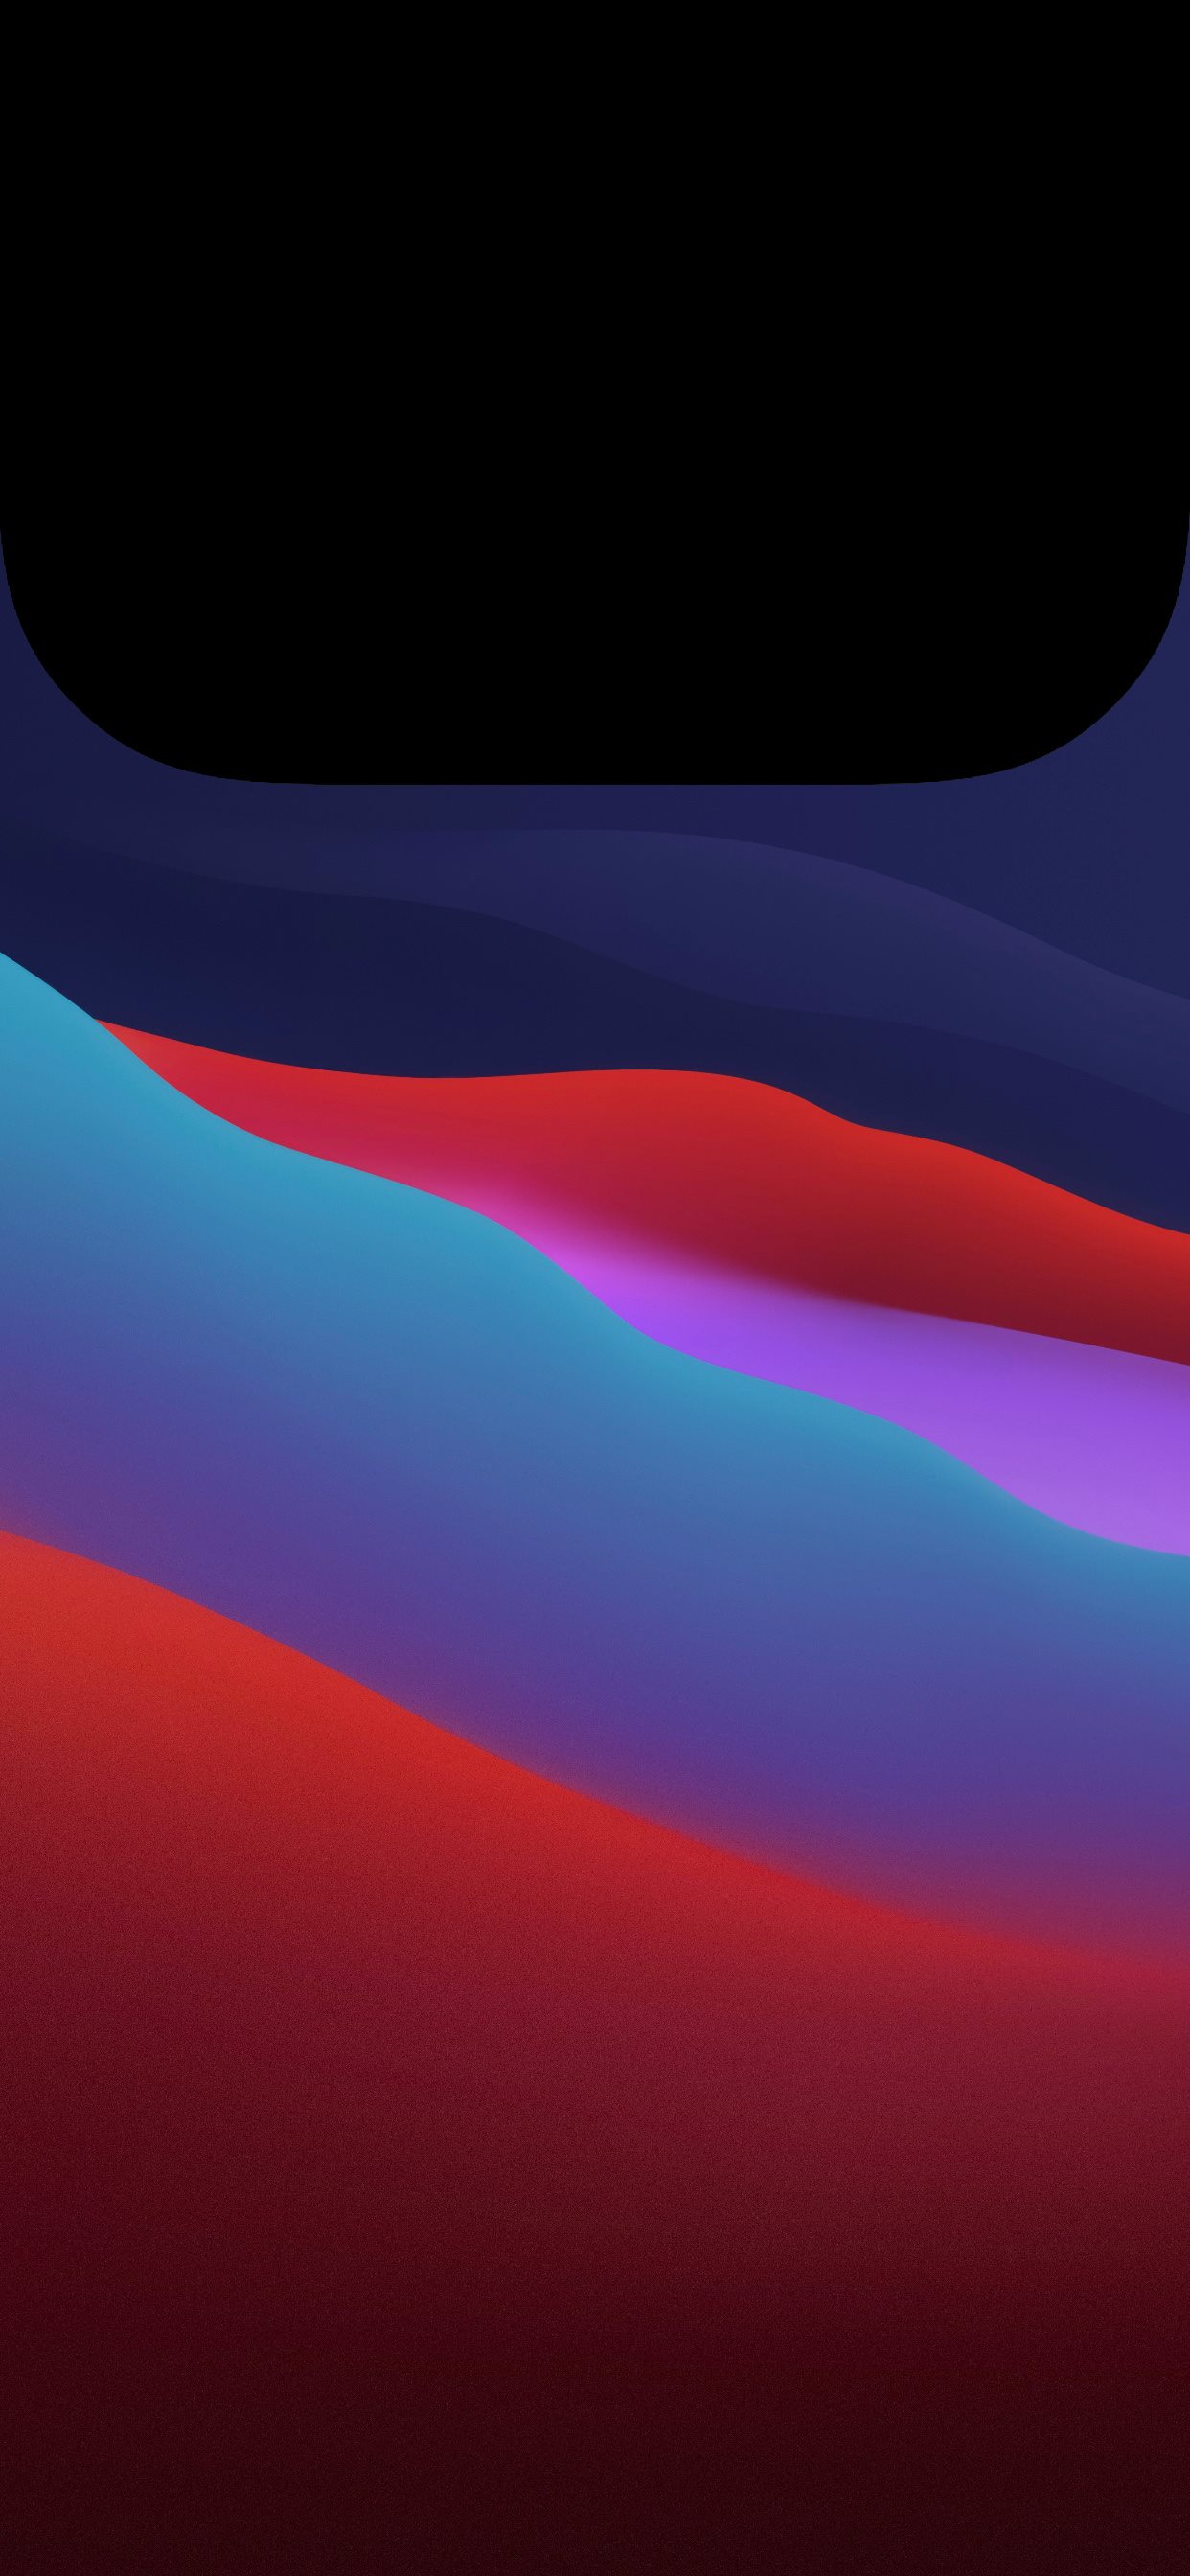 MacOS Big Sur Dark for Widgets Dark by AR7 iPhone X Wallpapers Free Download